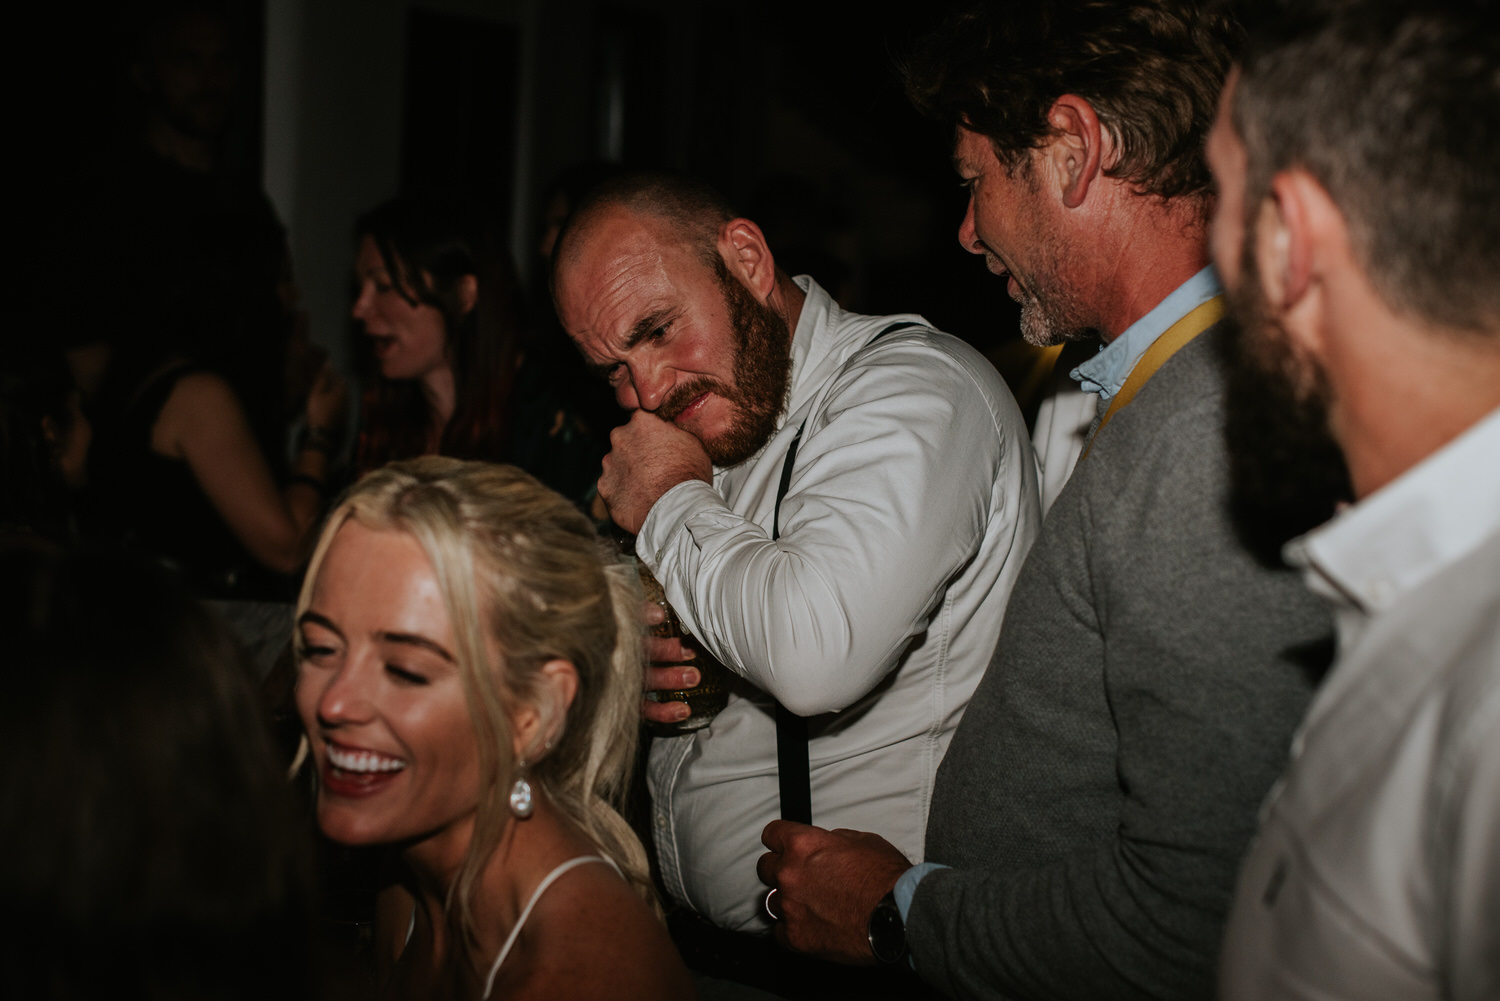 Mykonos wedding photographer: wedding guest skilfully opening a bottle with his teeth on the dance floor for Mykonos wedding celebration.